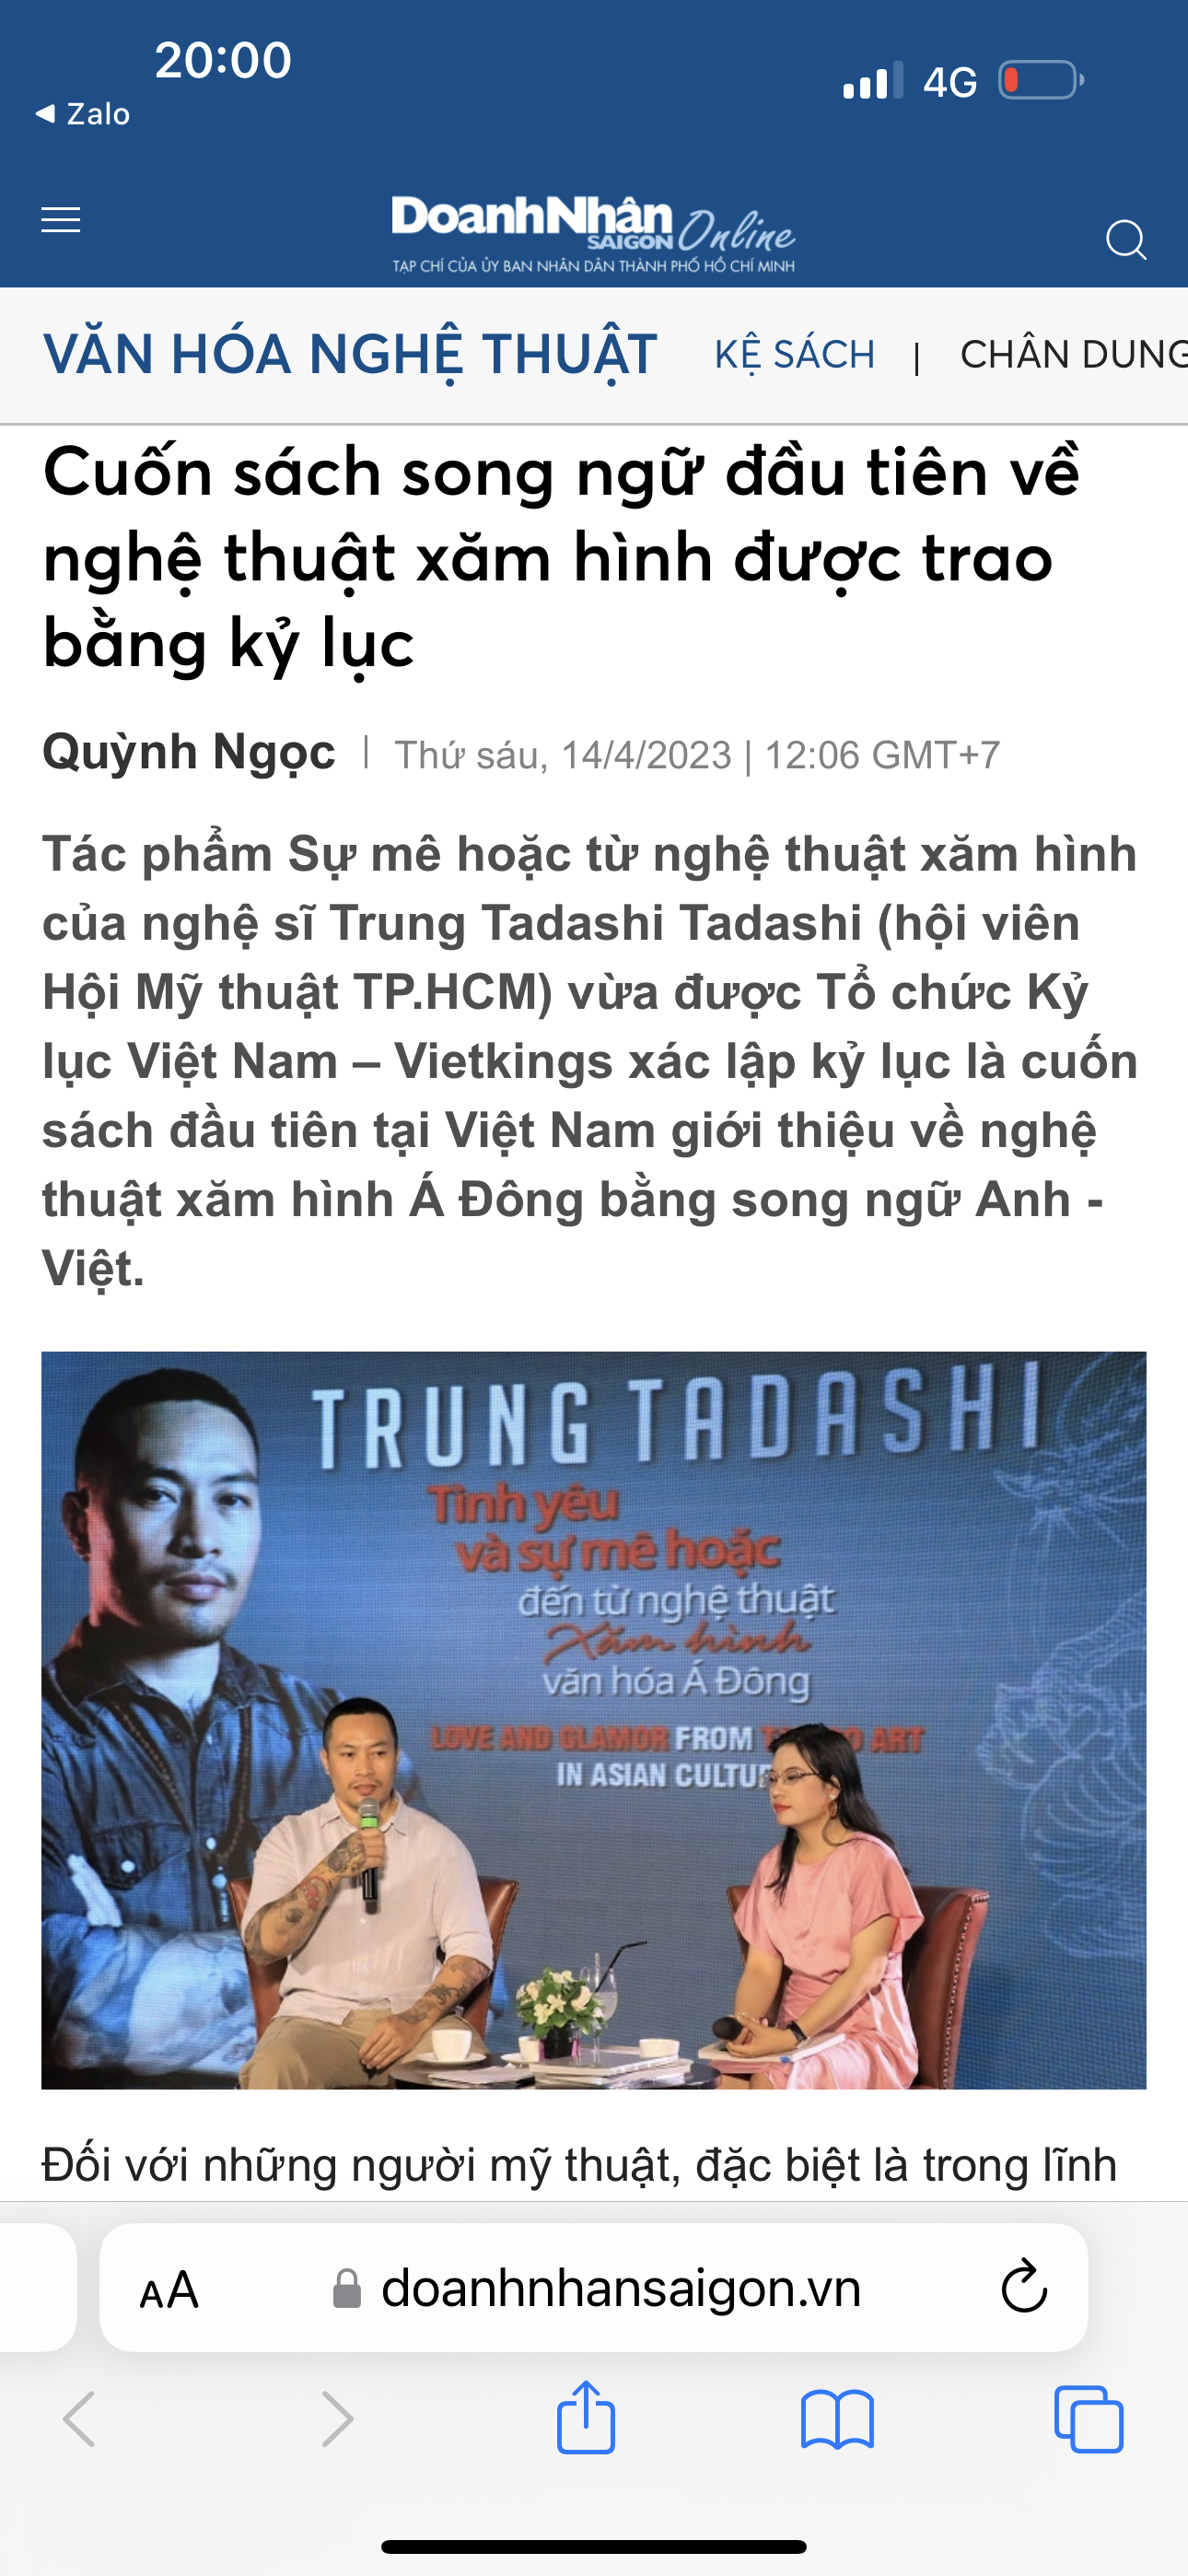 Doanh Nhan Sai Gon online newspaper